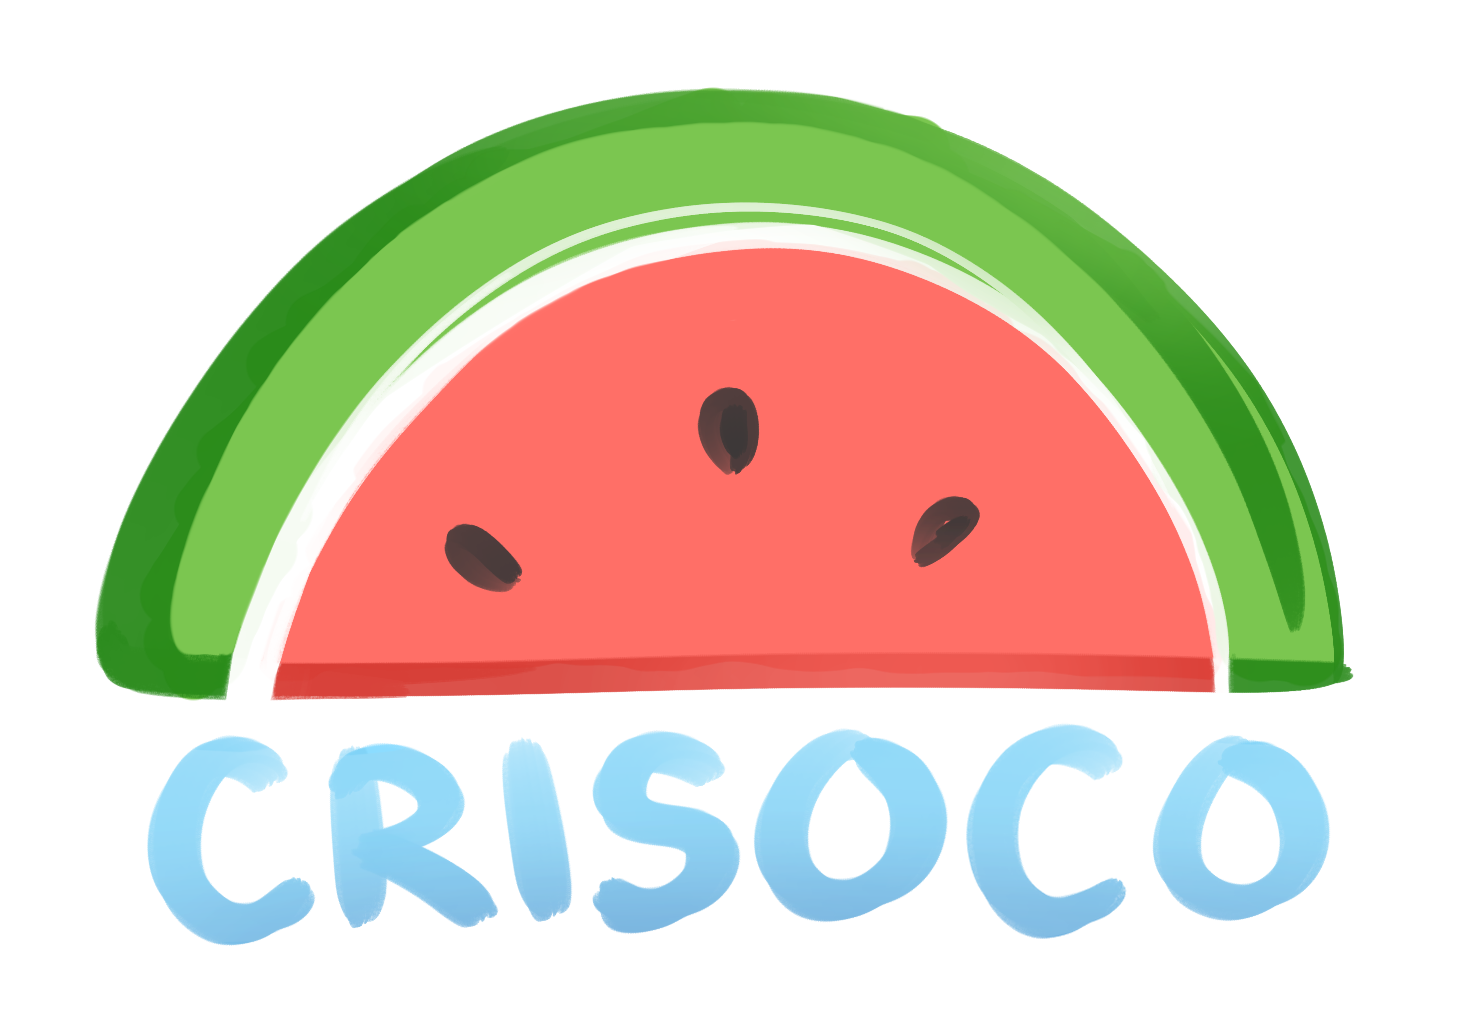 Crisoco